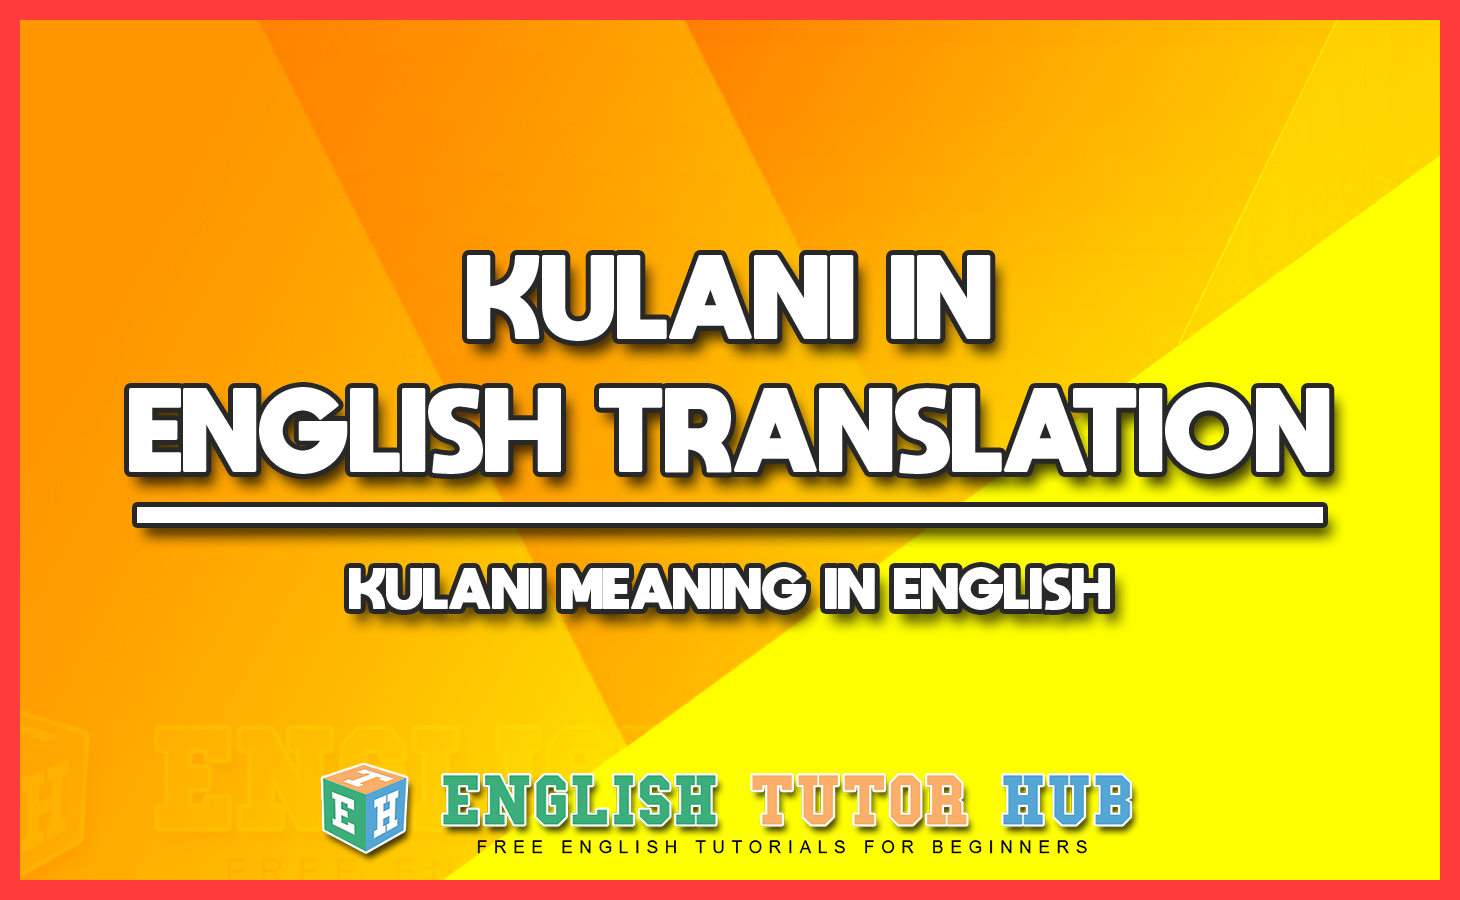 KULANI IN ENGLISH TRANSLATION - KULANI MEANING IN ENGLISH